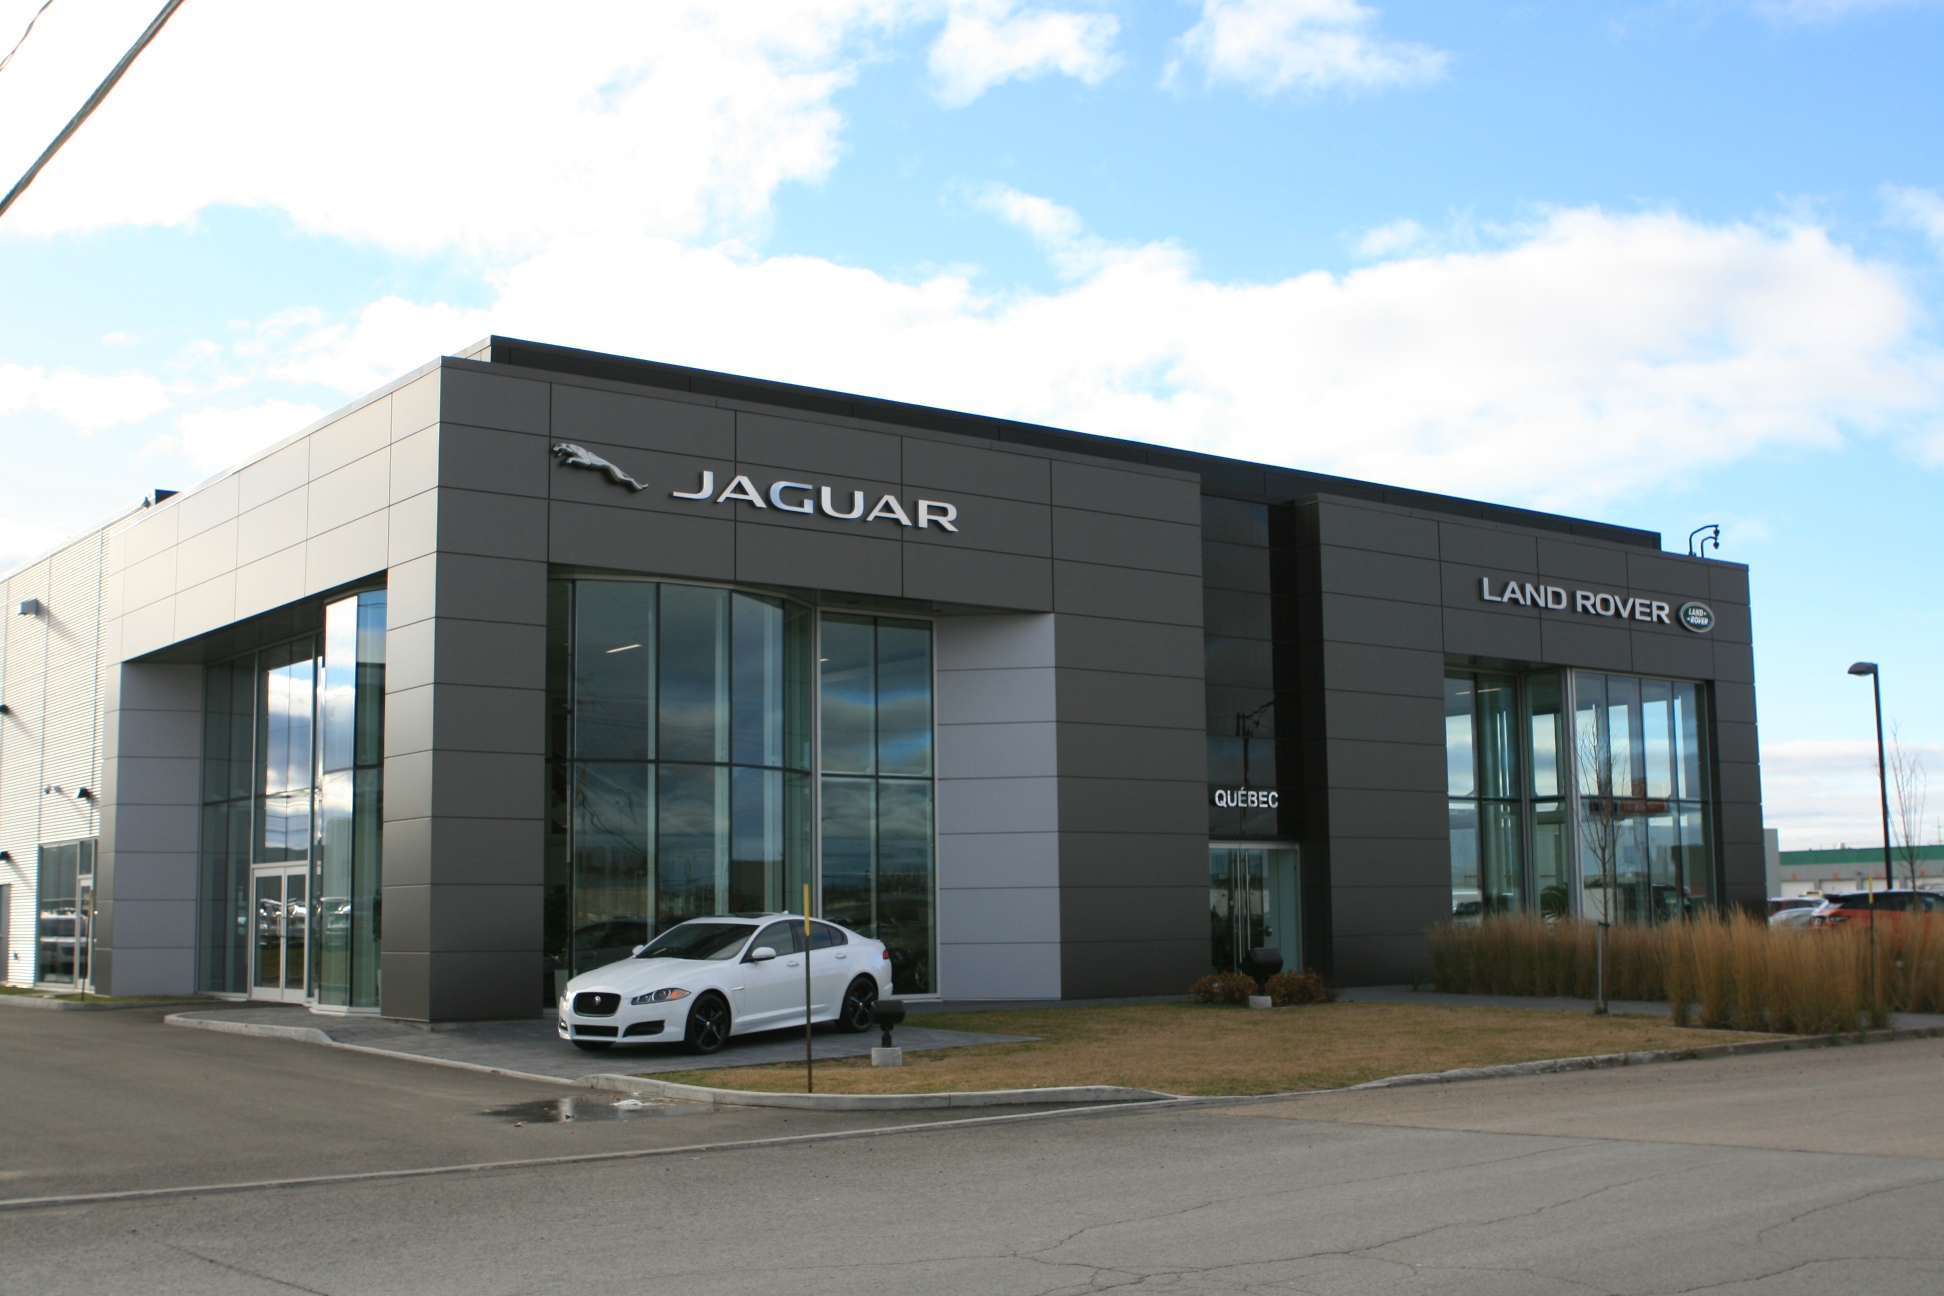 Jaguar Car Dealership Jaguar Land Rover Is Not For Sale